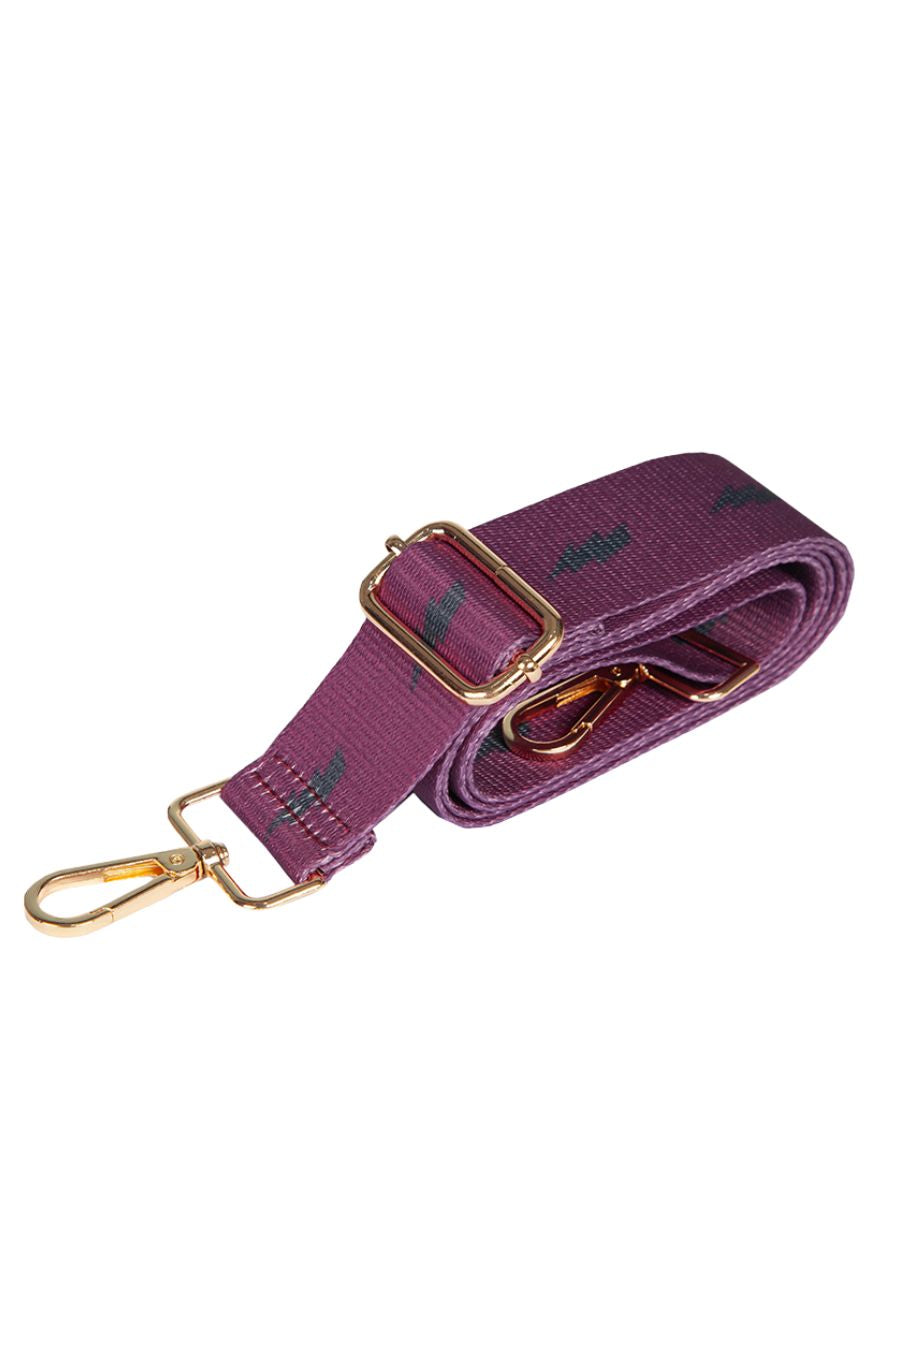 pink crossbody bag strap with black lighning bolts, adjustable strap with gold hardware